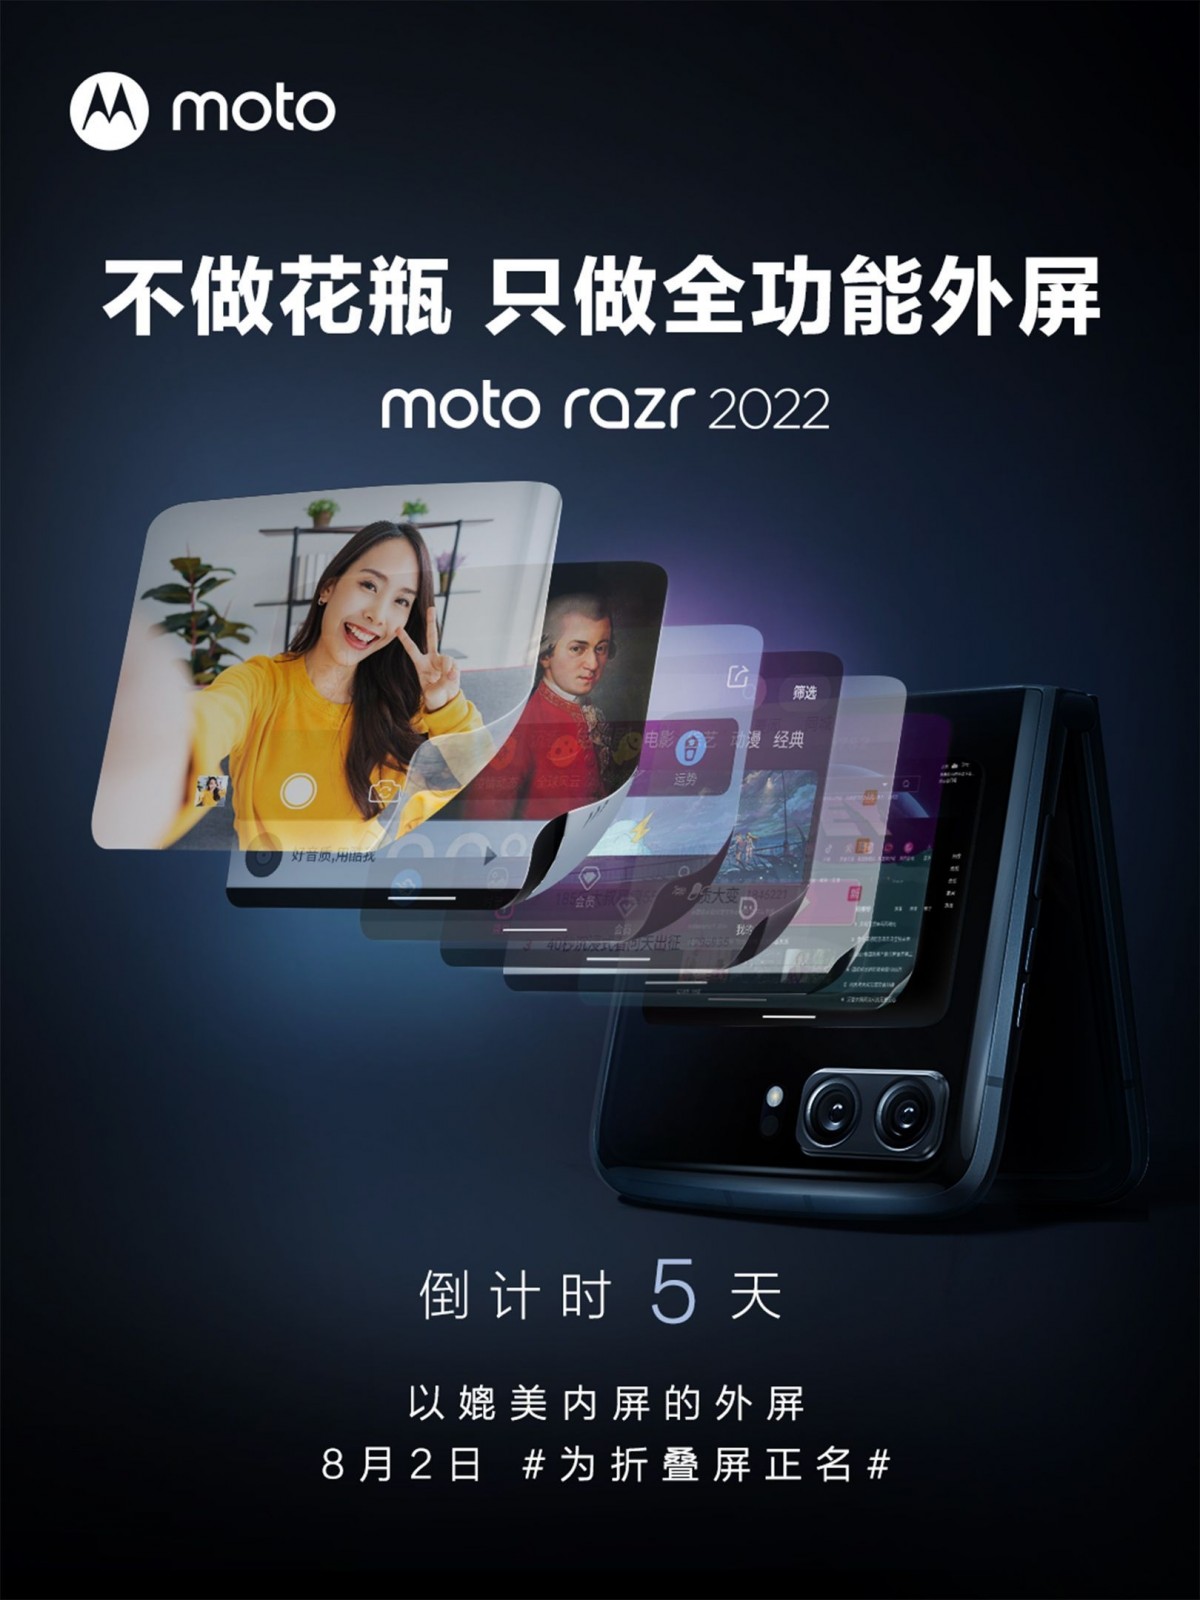 First official Moto Razr 2022 reveals the new bigger screen